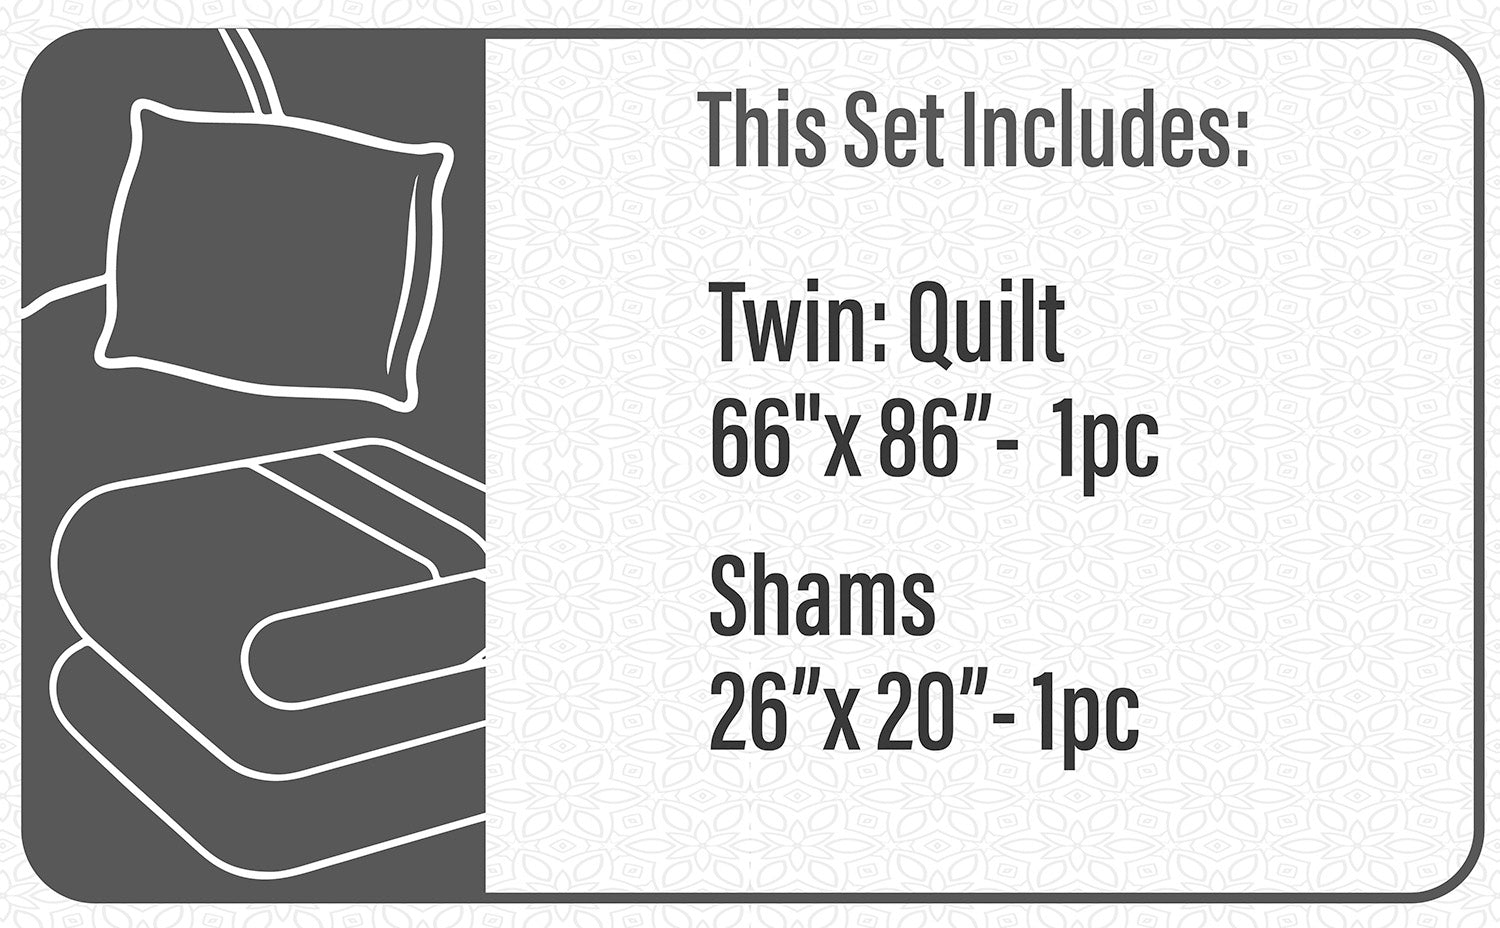 Quilt Bedding Set Woven 2 Piece Set Twin Pacifica - DecoElegance - Bedding Quilt Set